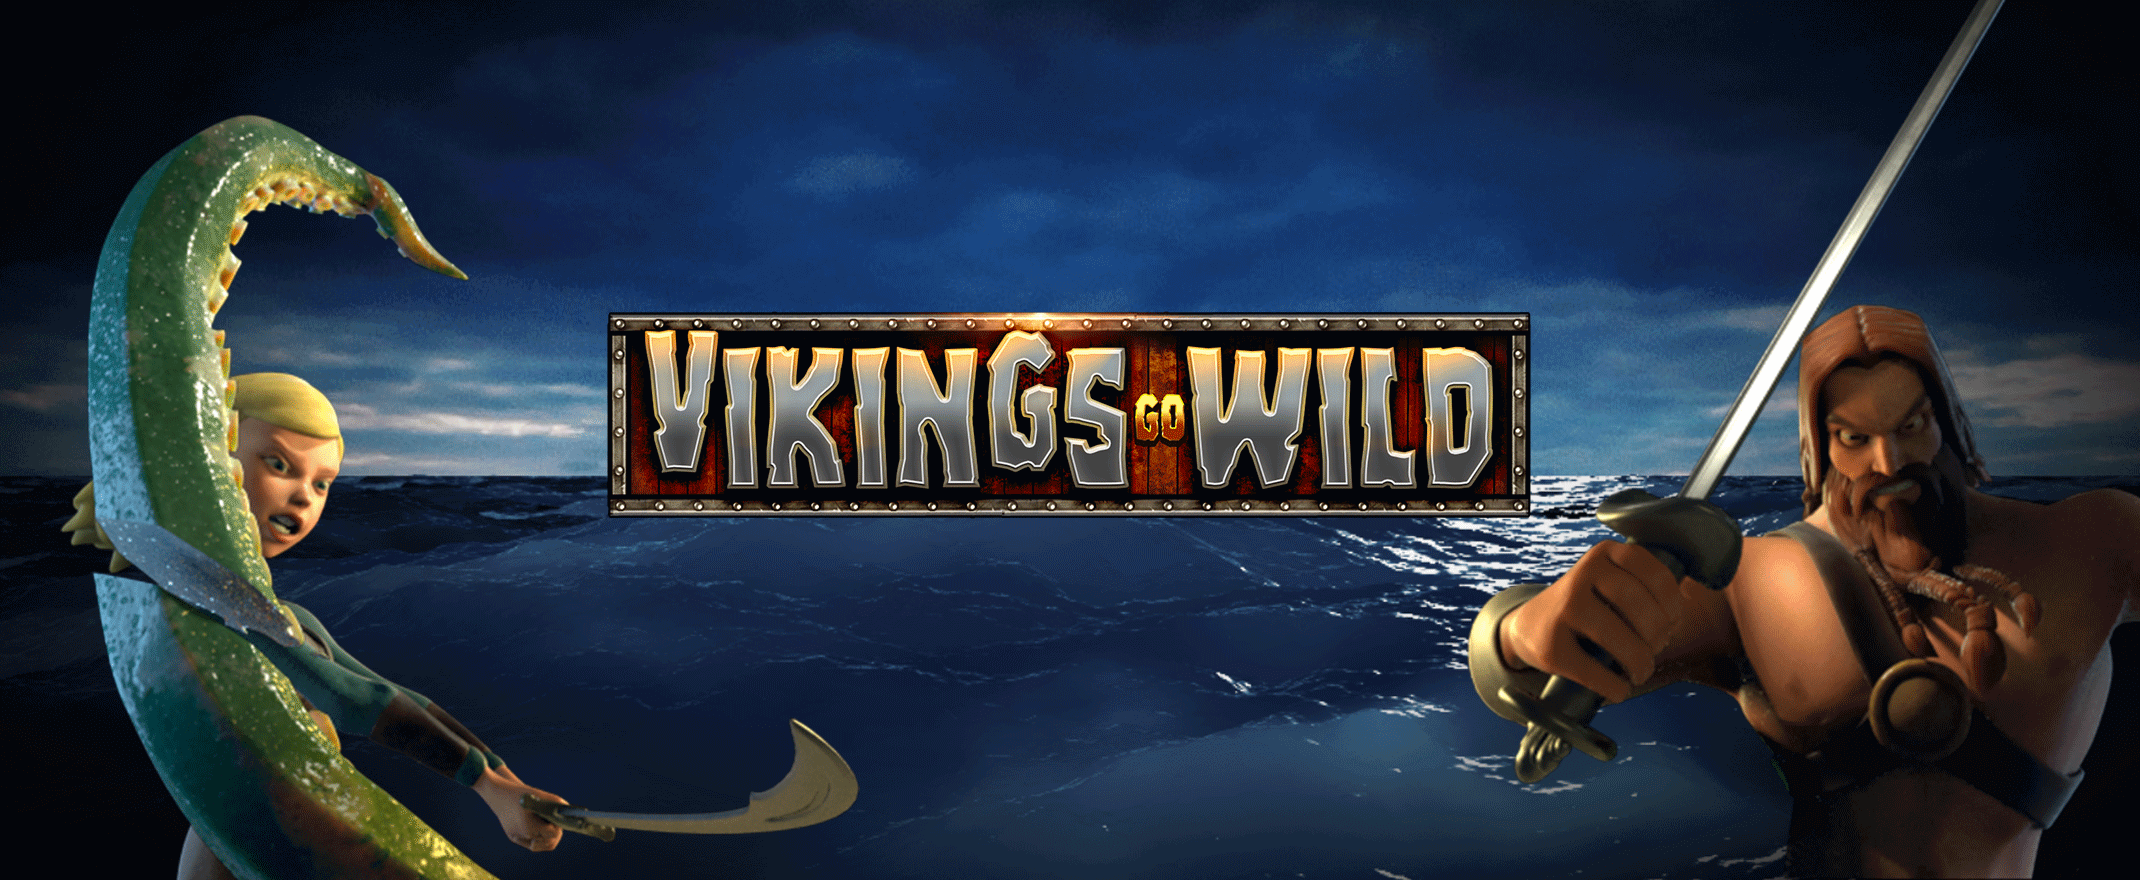 Vikings Go Wild Review